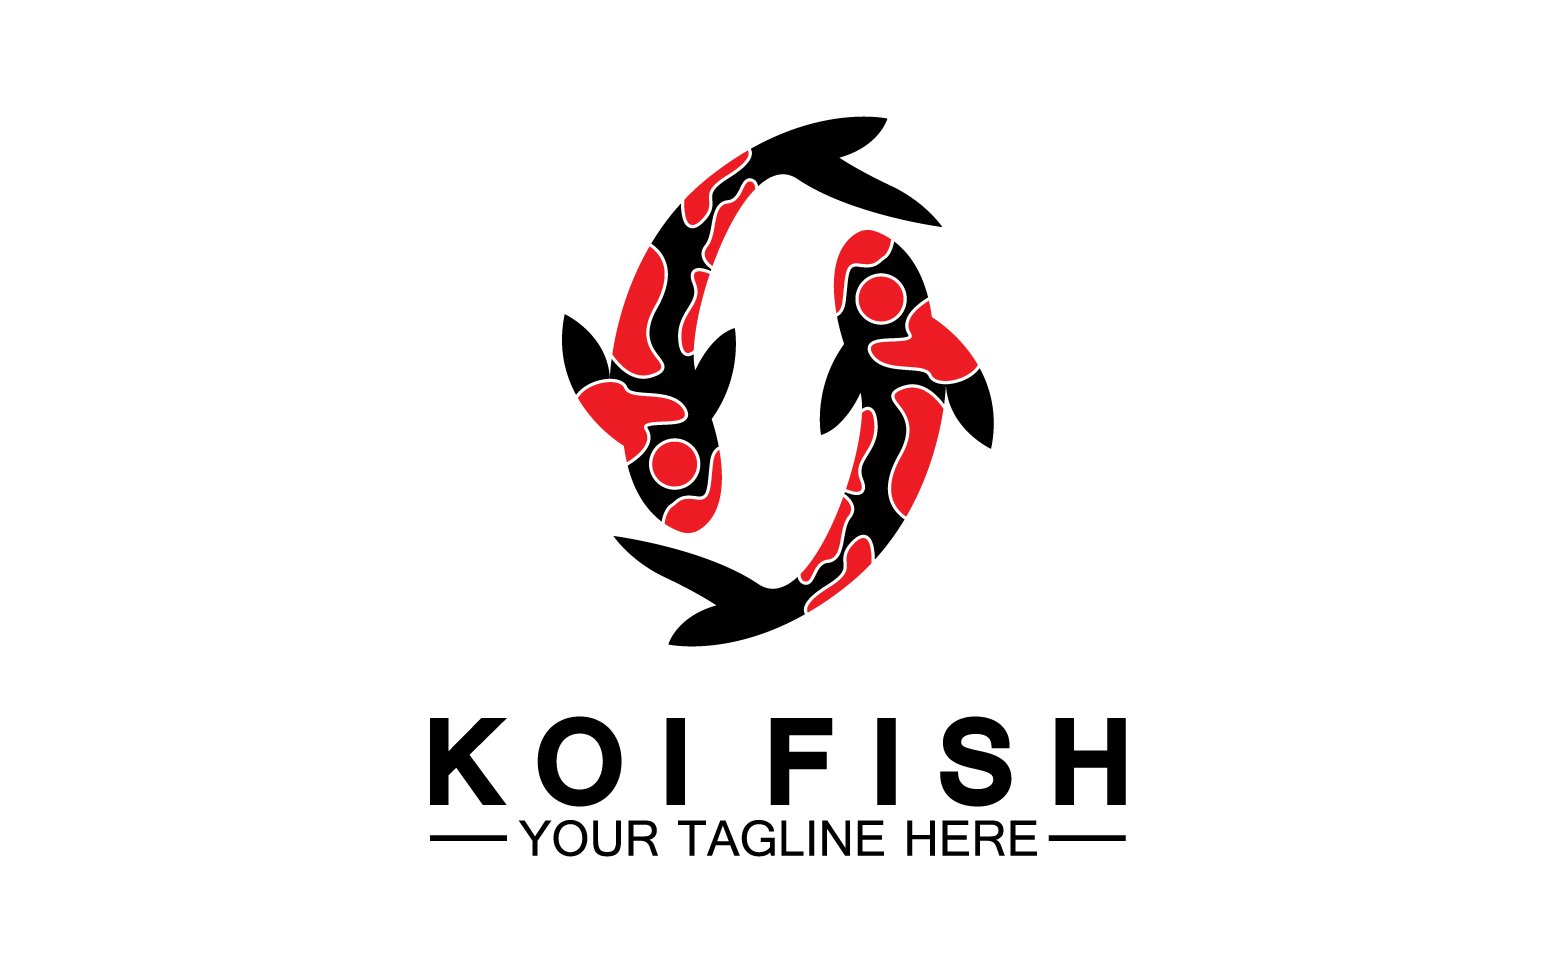 Fish koi black and red icon logo vector v20